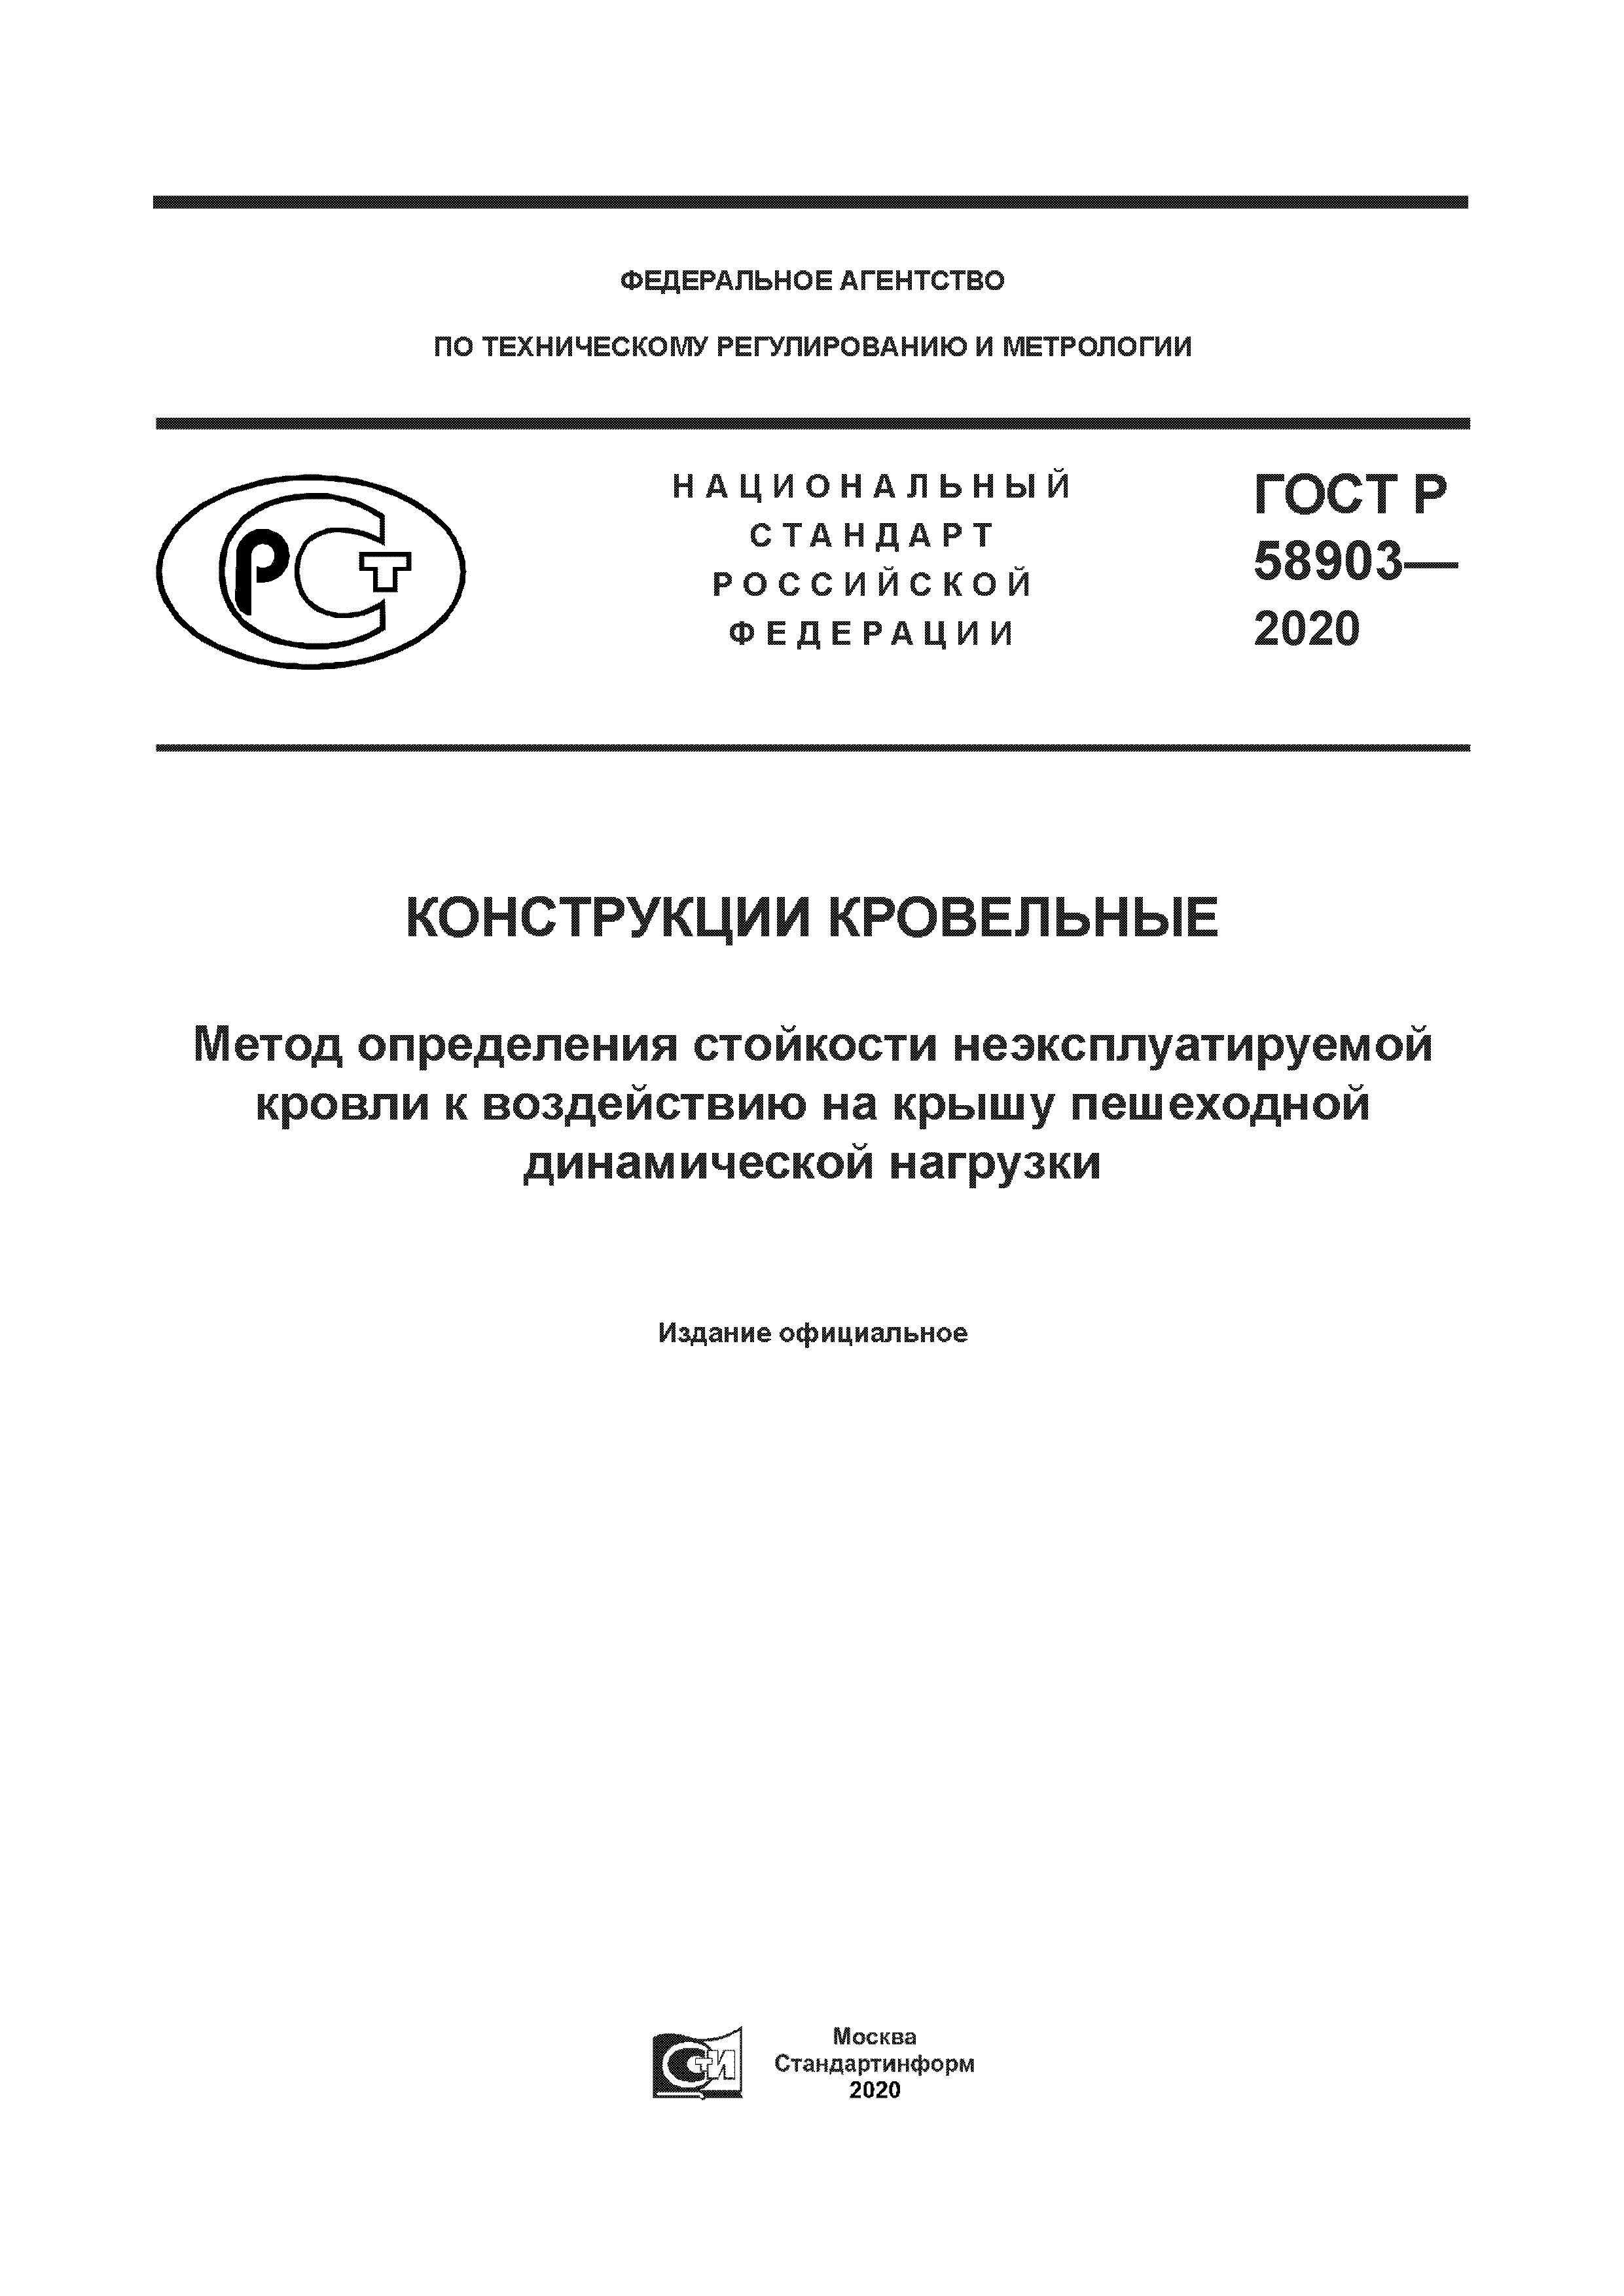 ГОСТ Р 58903-2020